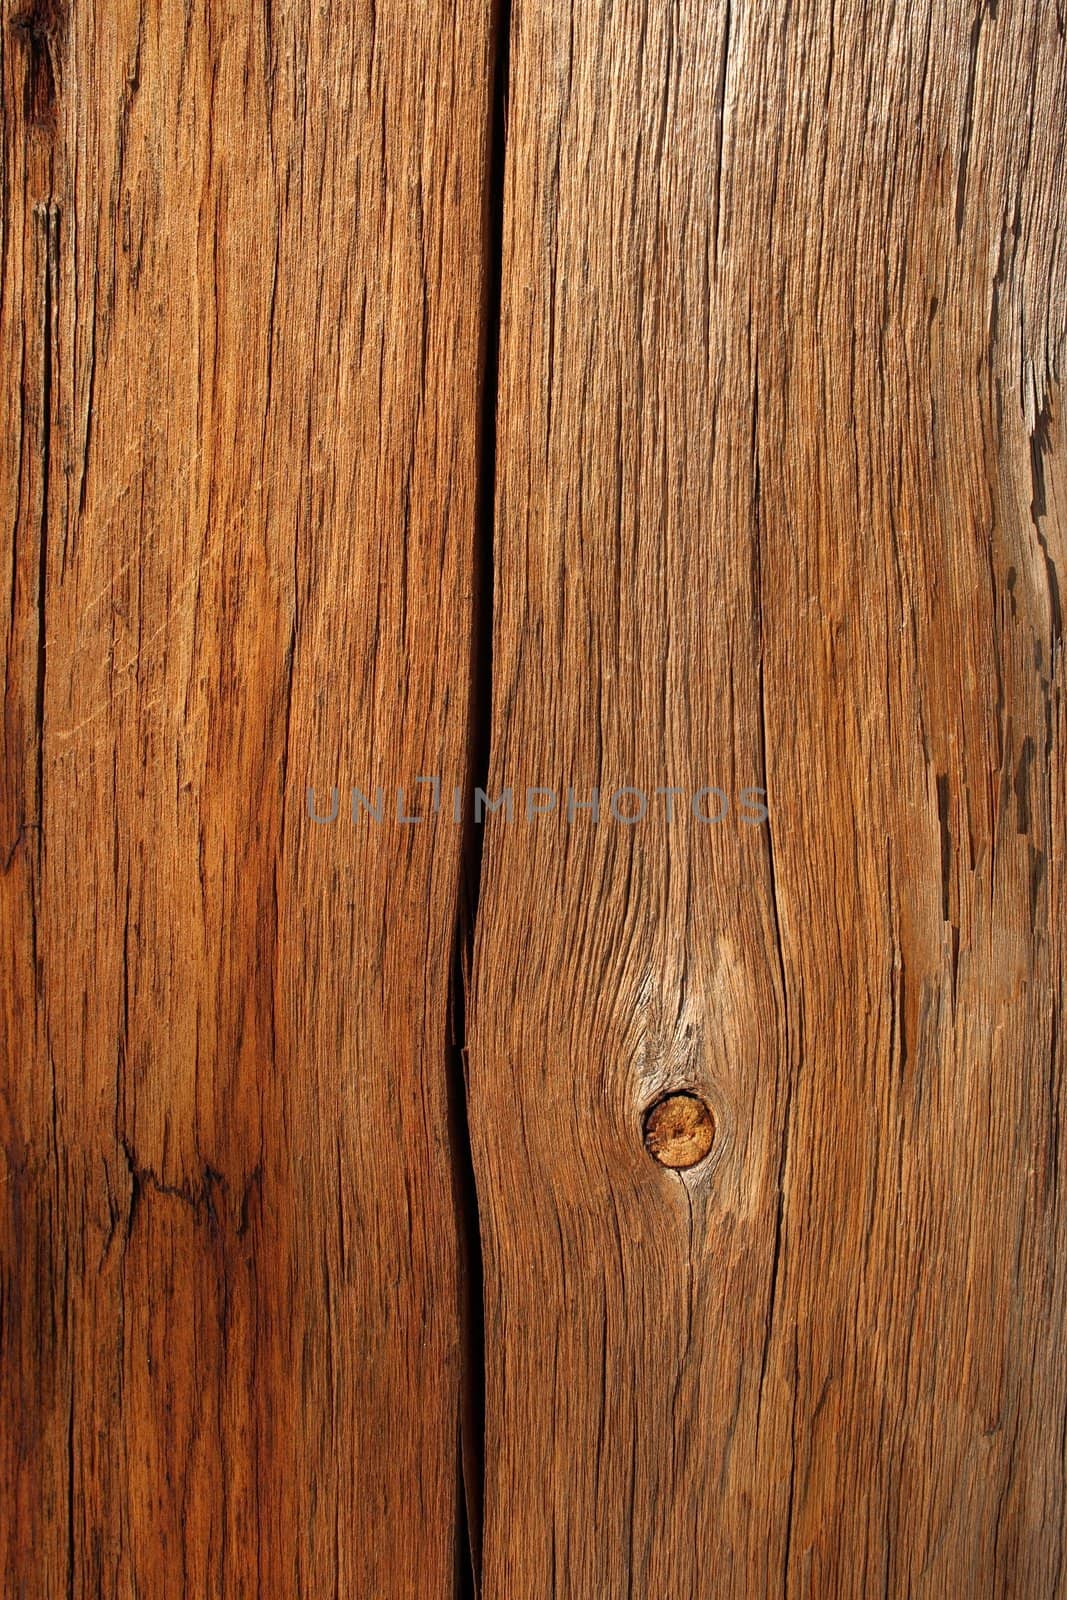 Old cracked grainy wood by anikasalsera